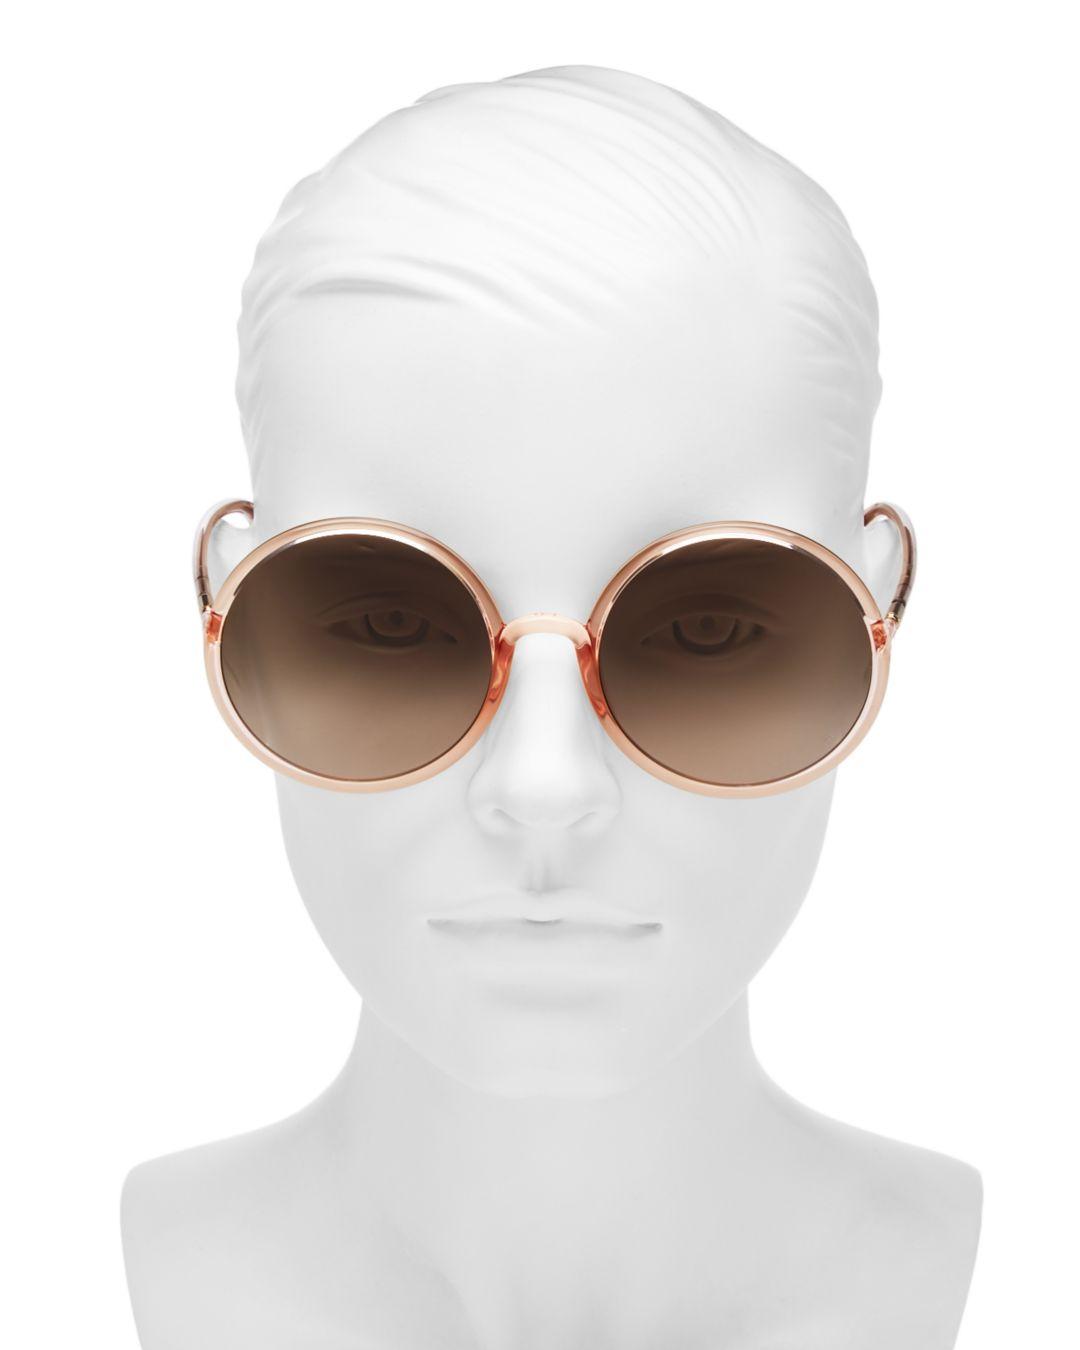 dior sunglasses black round sunglasses